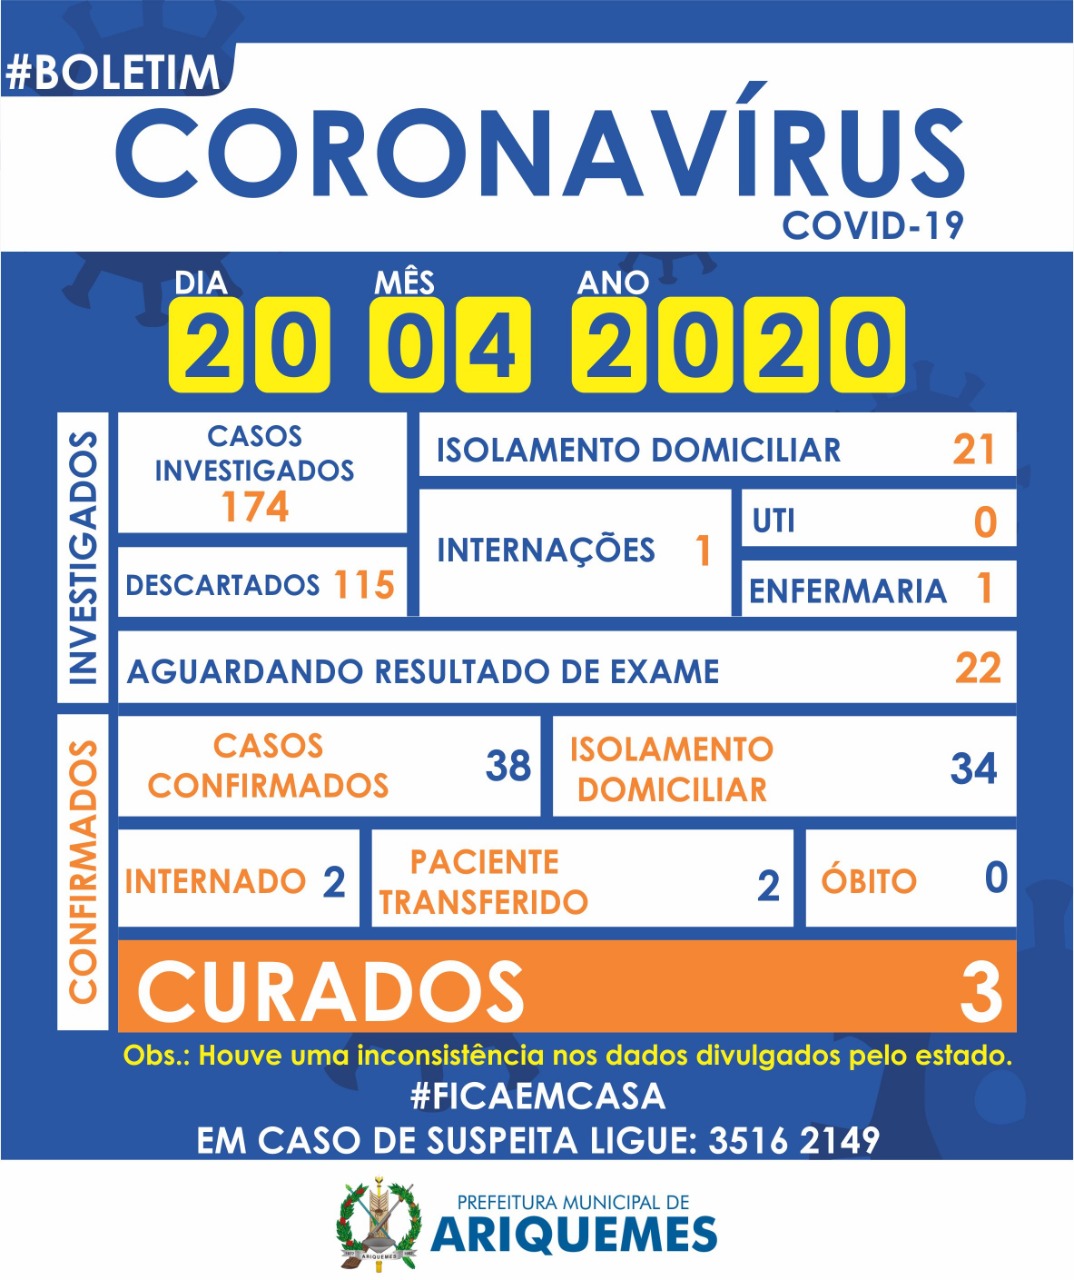 COVID-19: Boletim Coronavírus Ariquemes